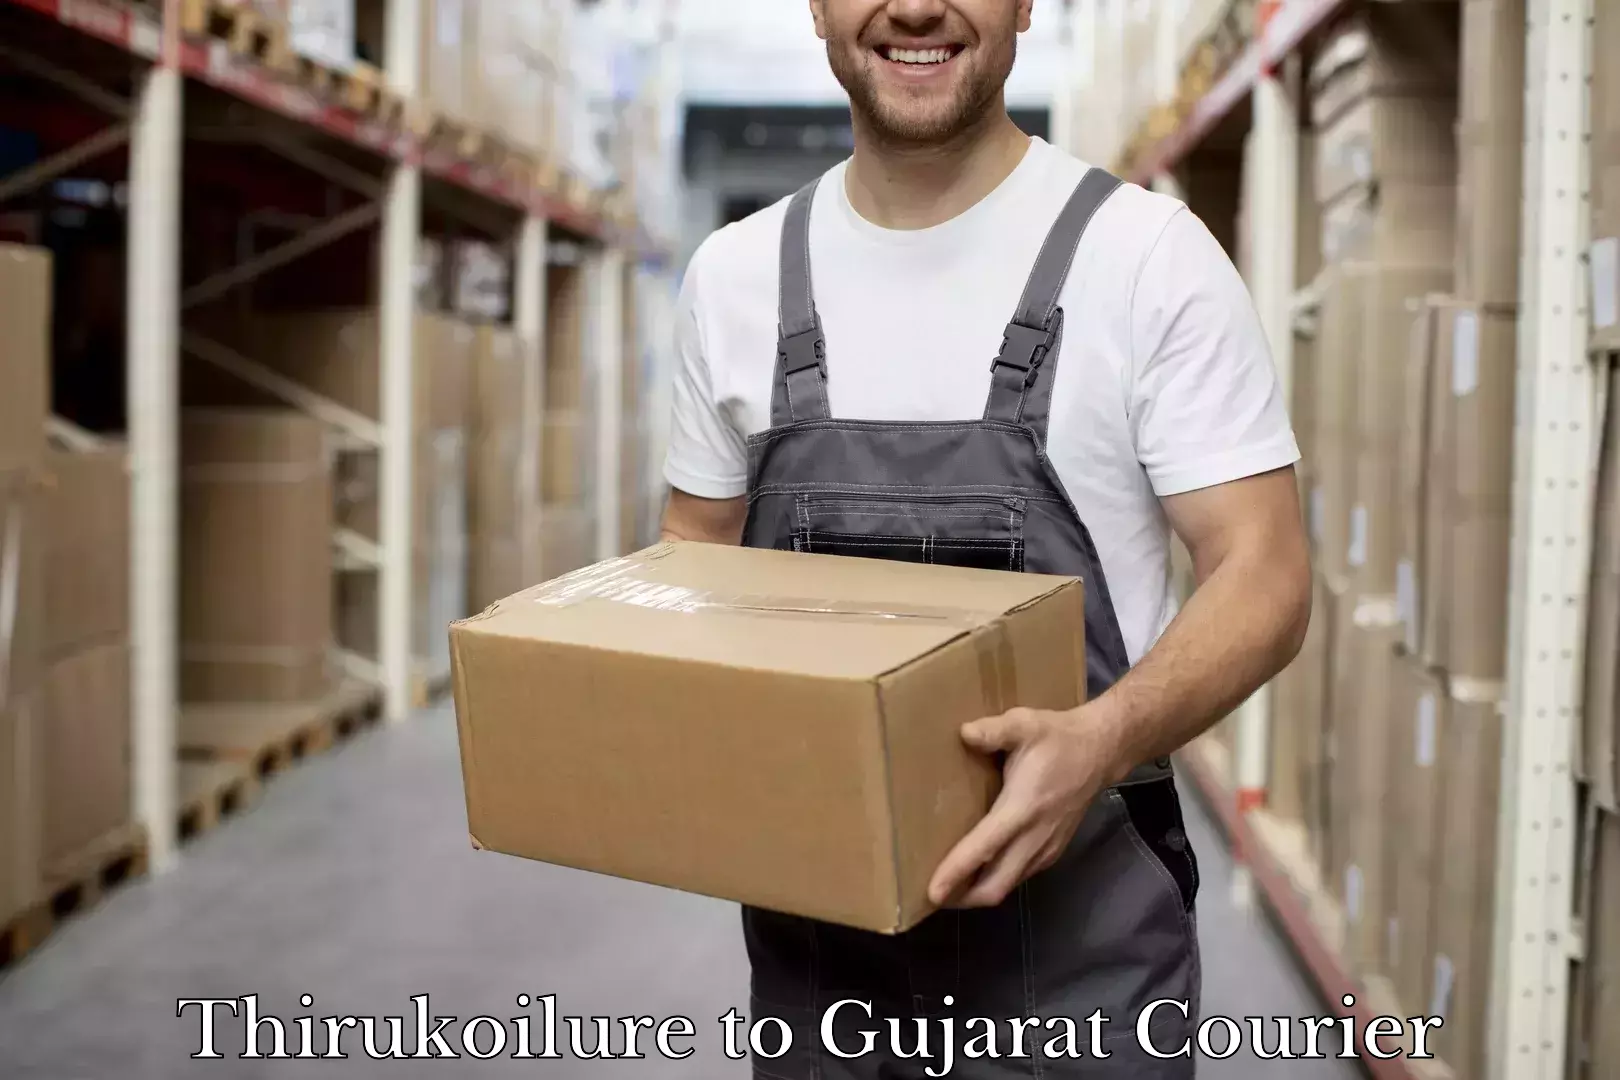 Luggage shipment processing Thirukoilure to Gujarat